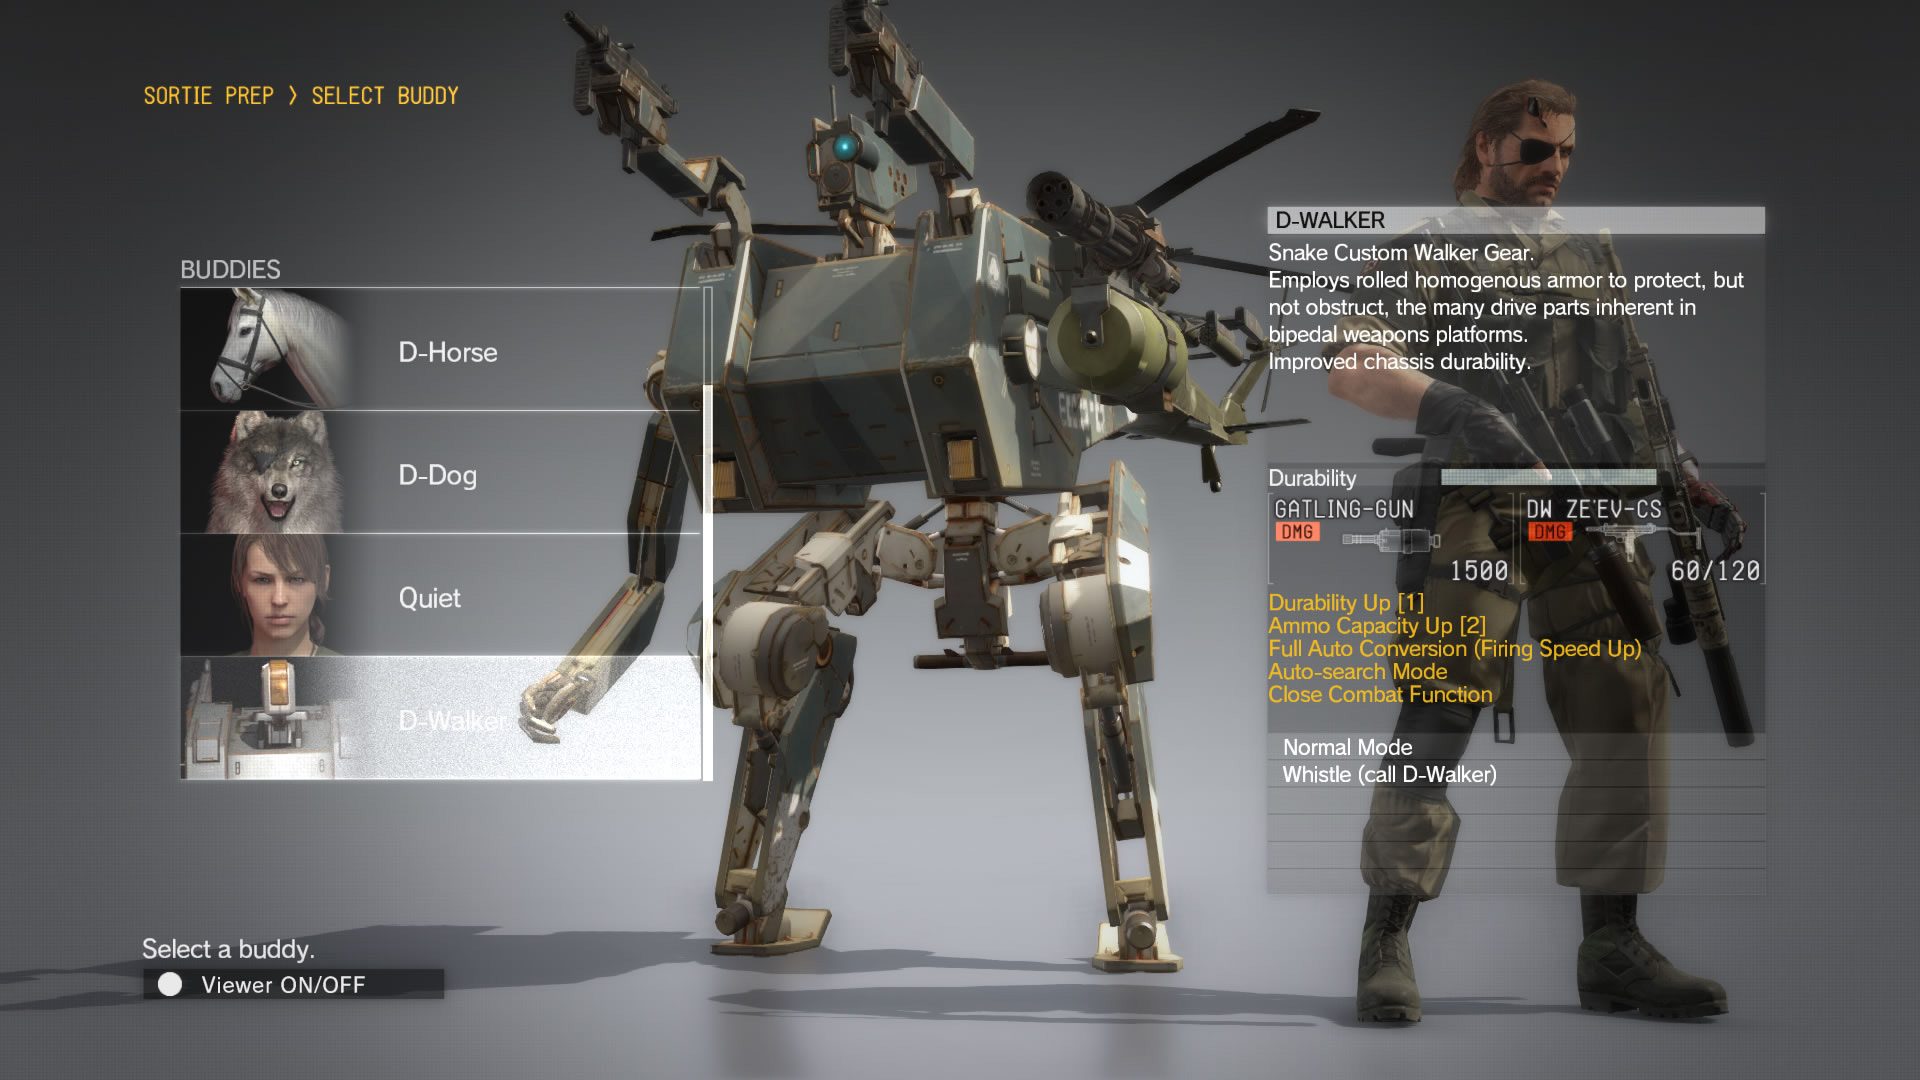 Metal-Gear-Solid-V-The-Phantom-Pain-E3-2015-Screen-Mission-Prep-D-Walker